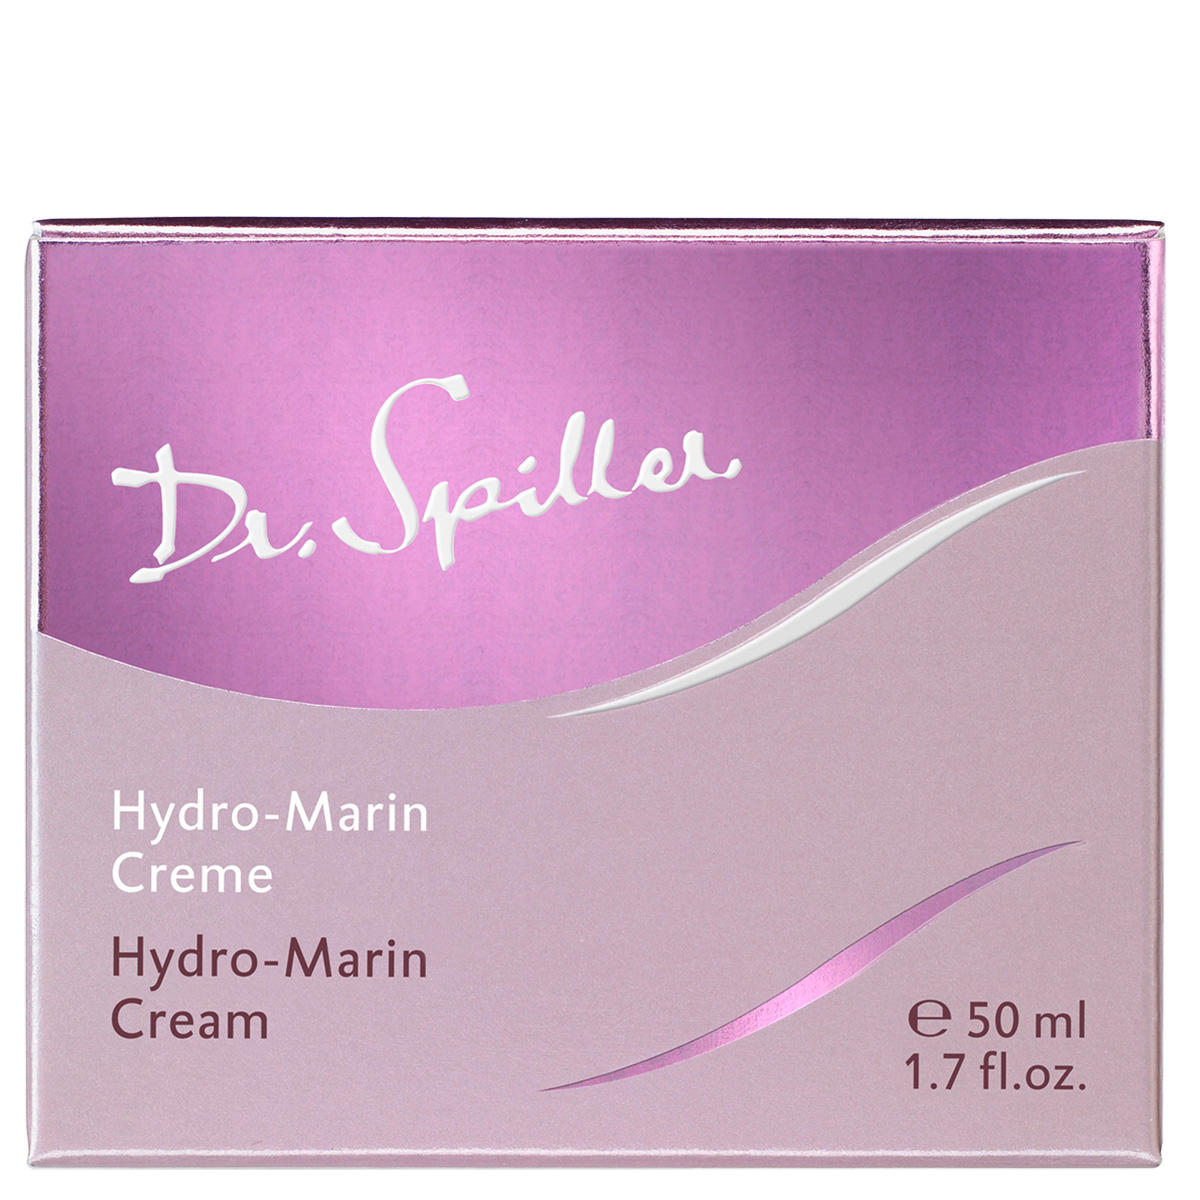 Dr. Spiller Biomimetic SkinCare Hydro-Marin Creme 50 ml - 3